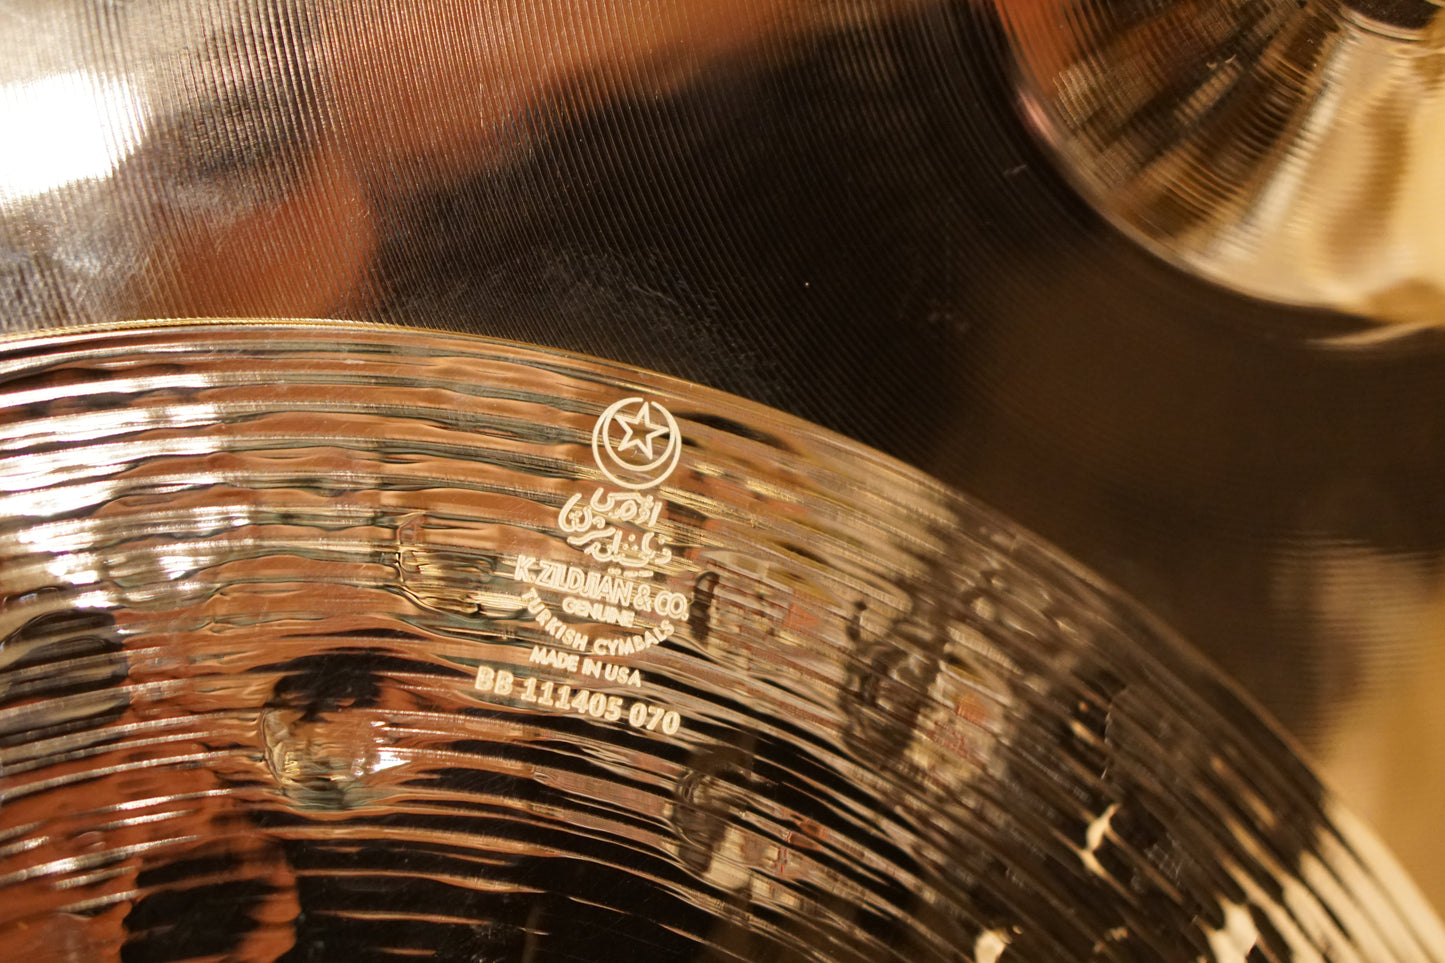 Zildjian 14" K. Custom Session Hi-Hat Cymbals - 988/1064g